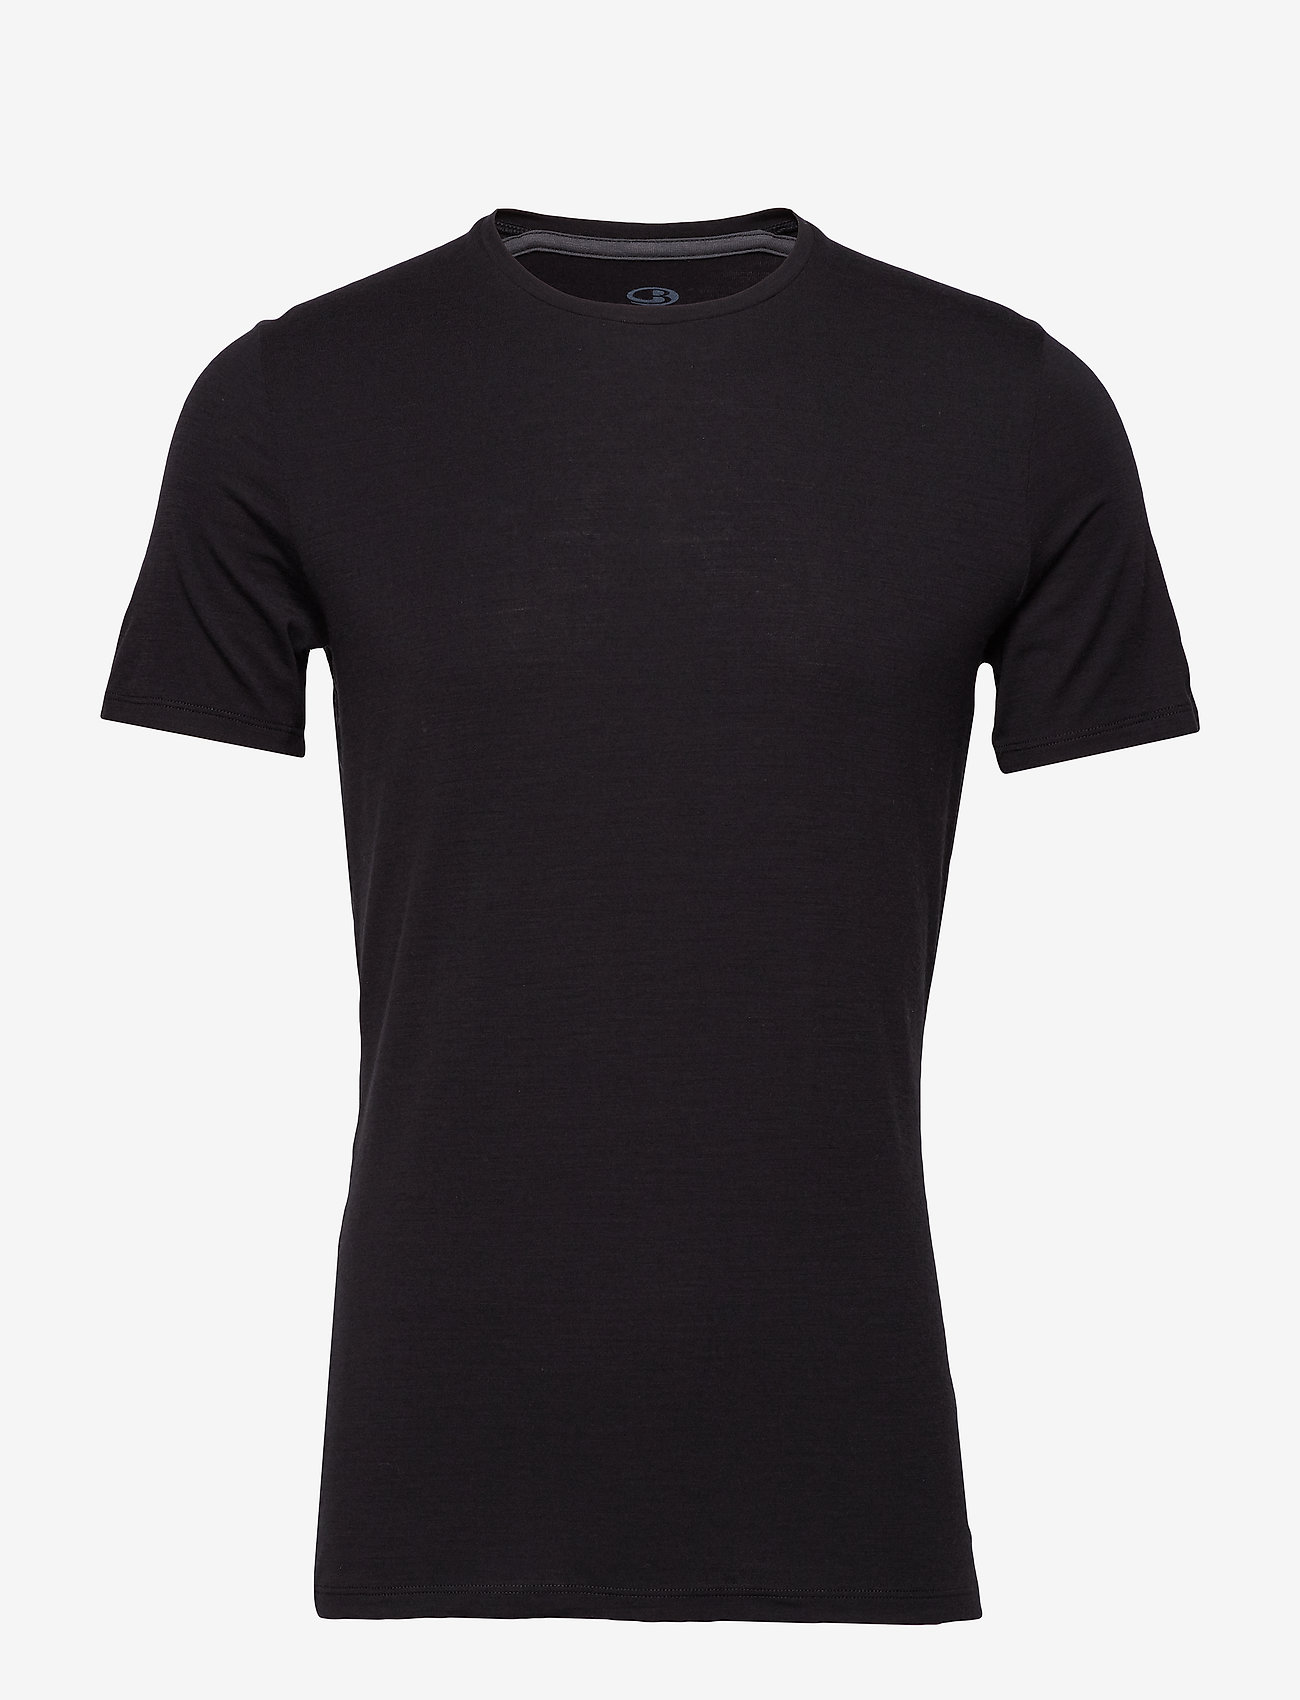 Icebreaker - Men Anatomica SS Crewe - short-sleeved t-shirts - black/monsoon - 0